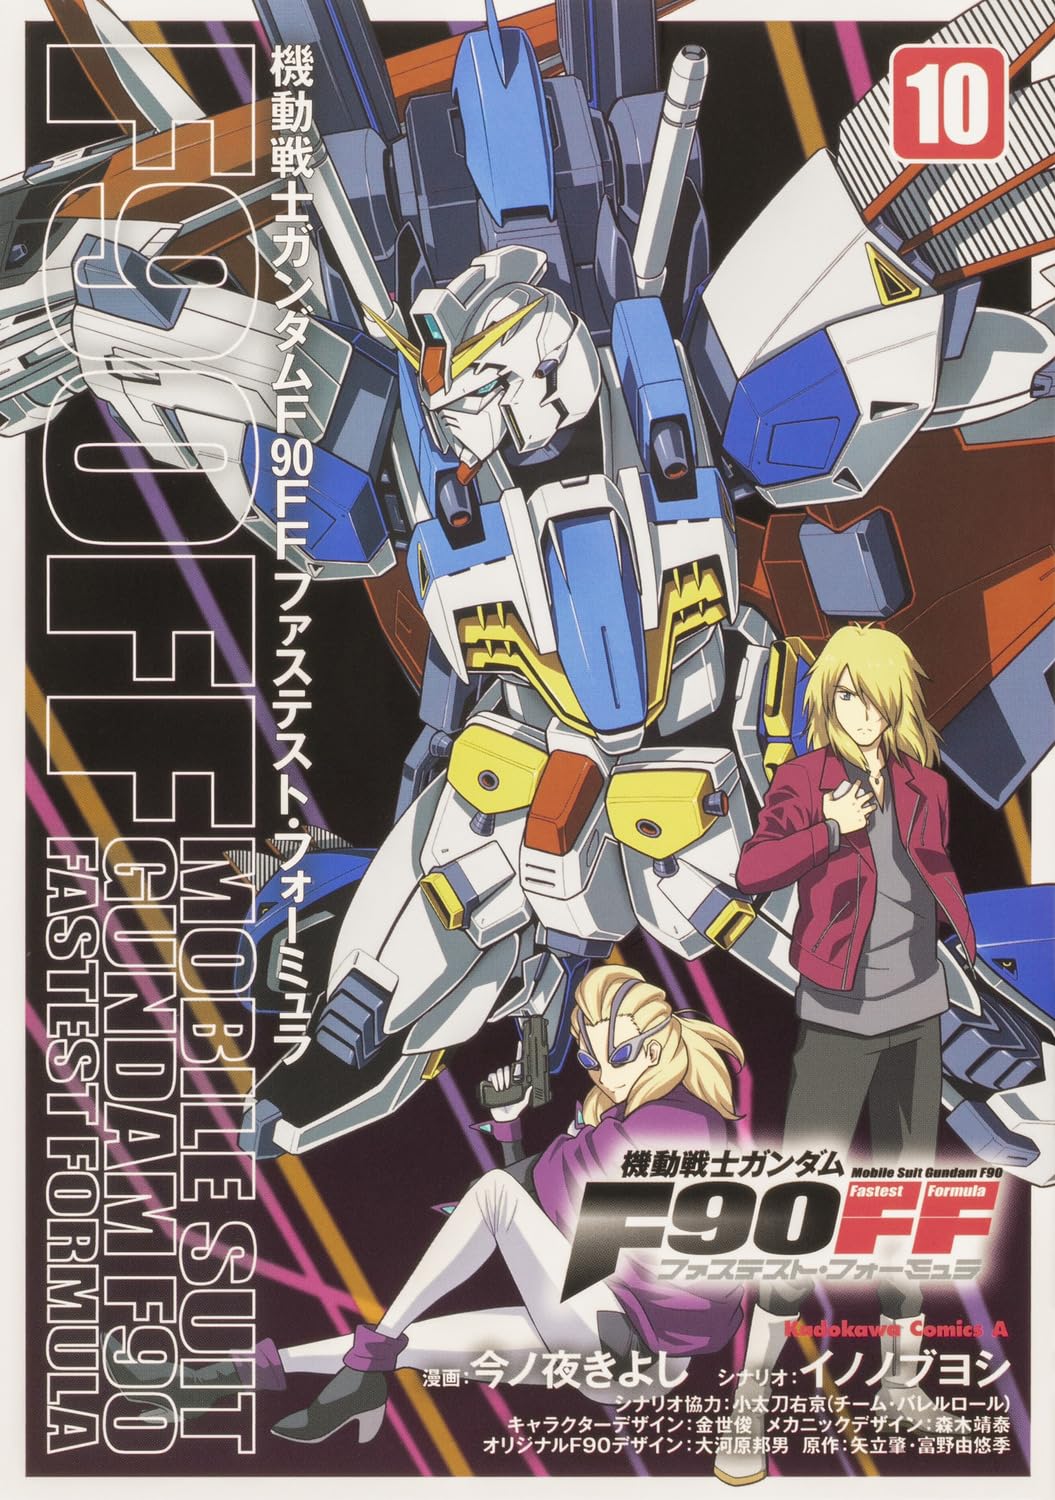 Mobile Suit Gundam F90FF Fastest Formula #10 /Comic